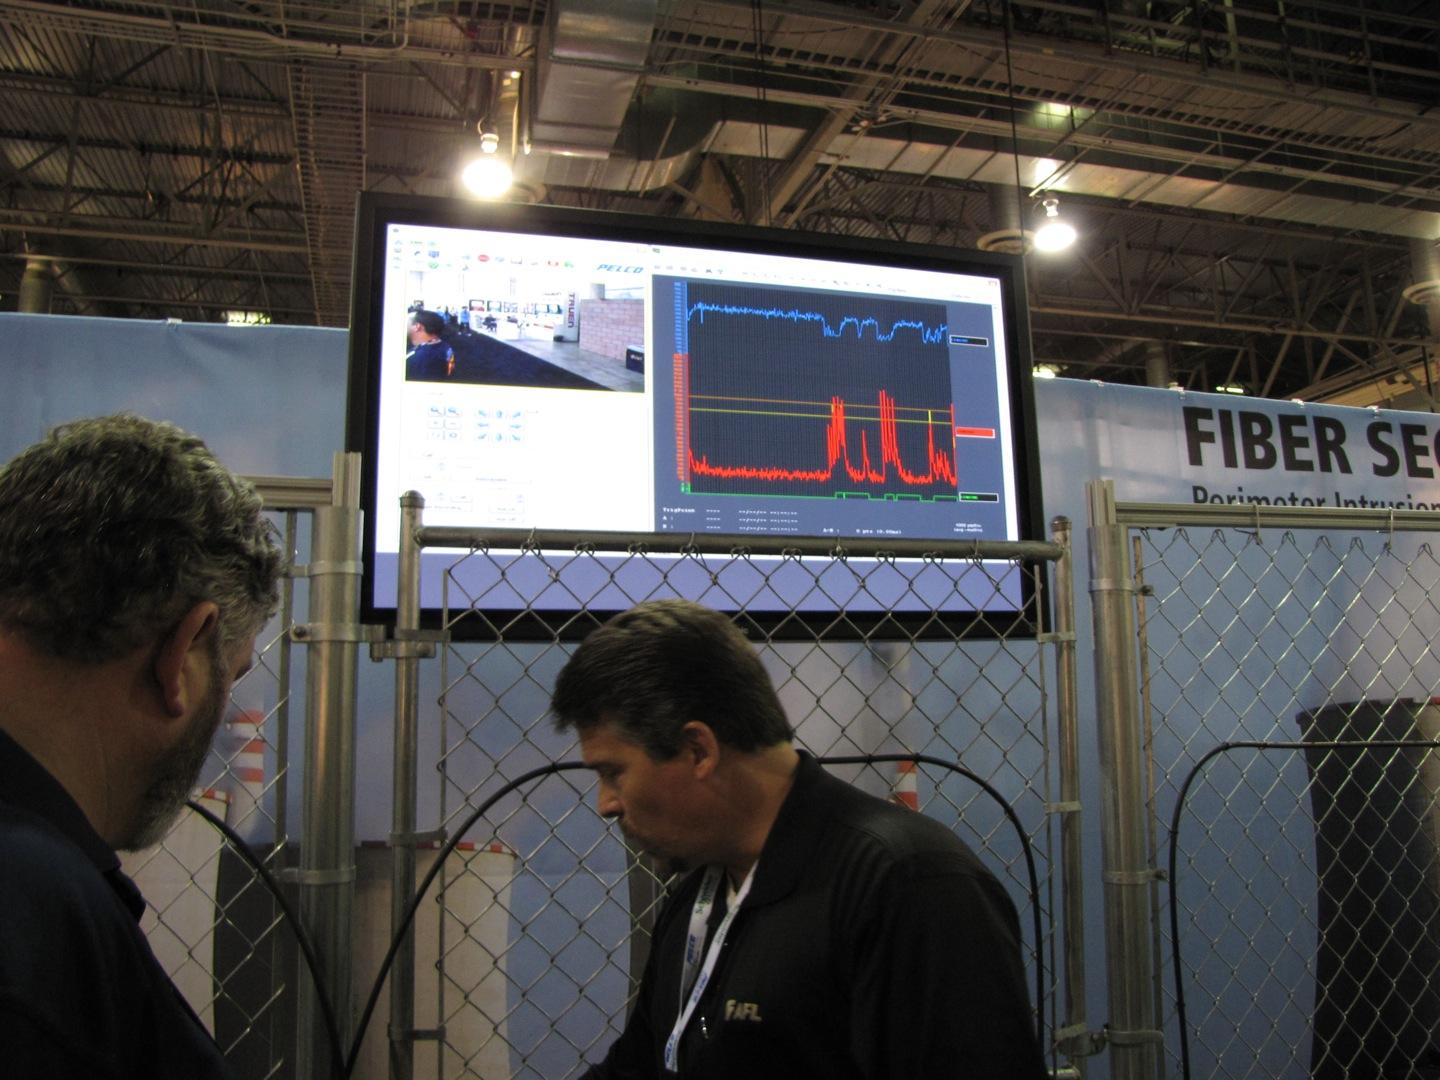 AFL's fiber optic perimeter intrusion detection system